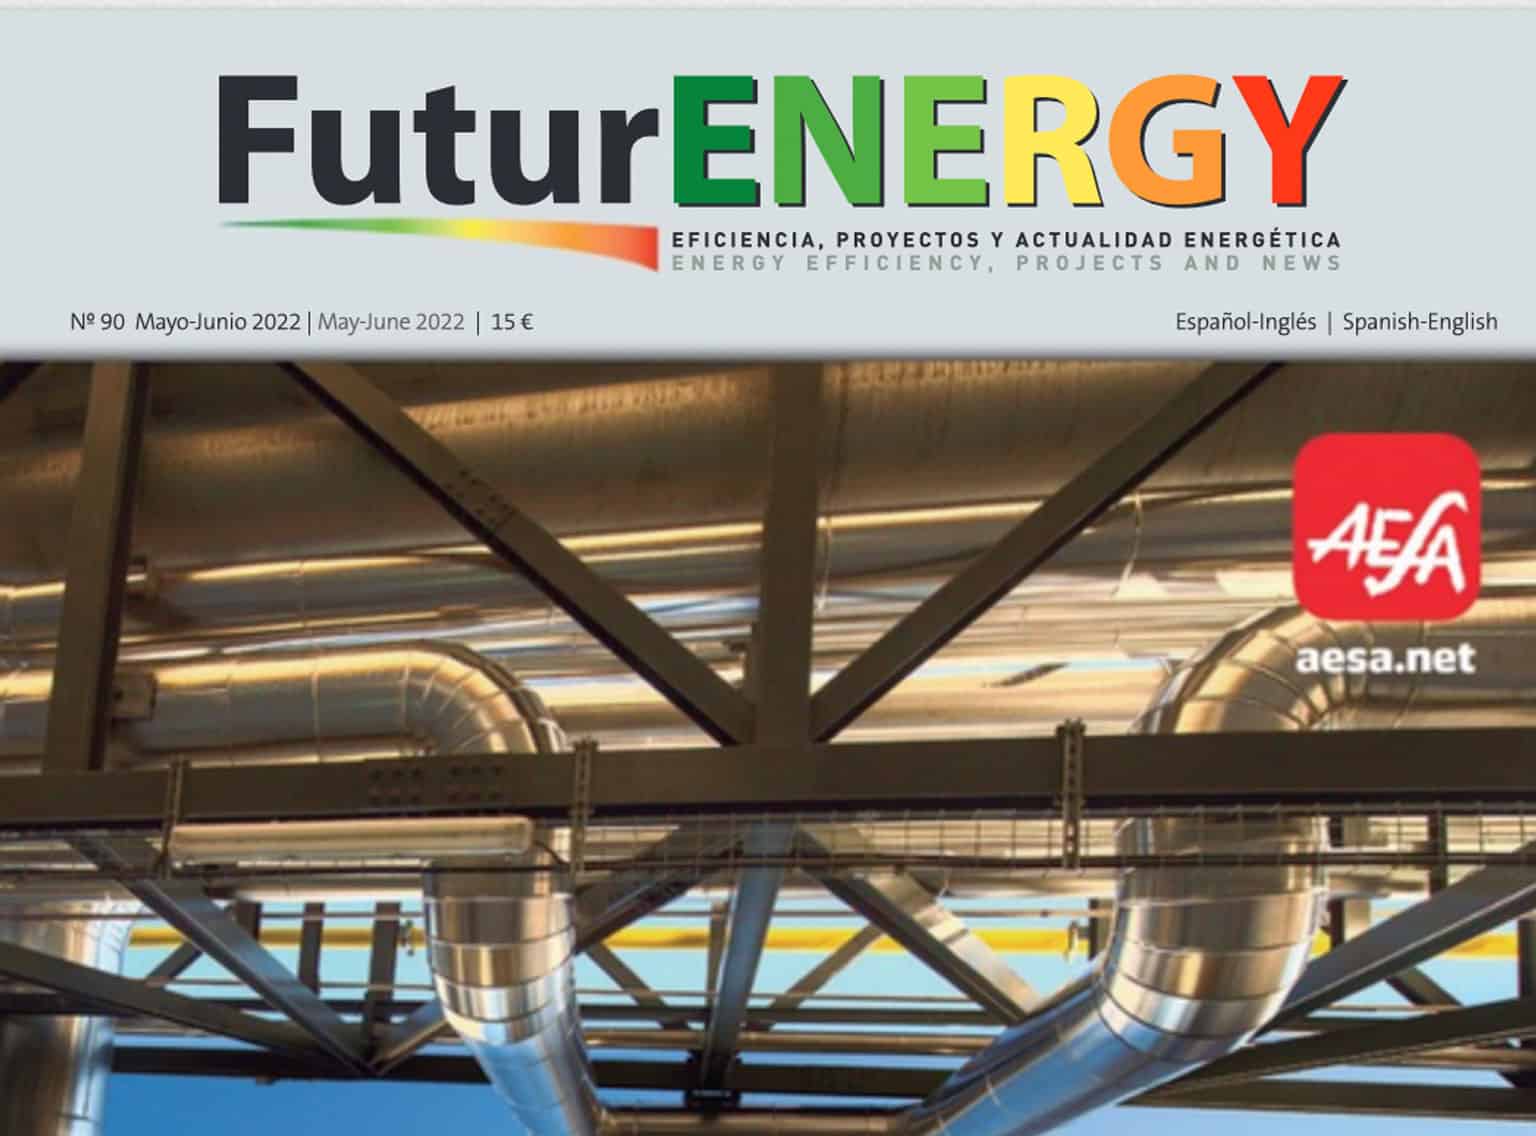 EnergyNest in latest edition of FuturENERGY